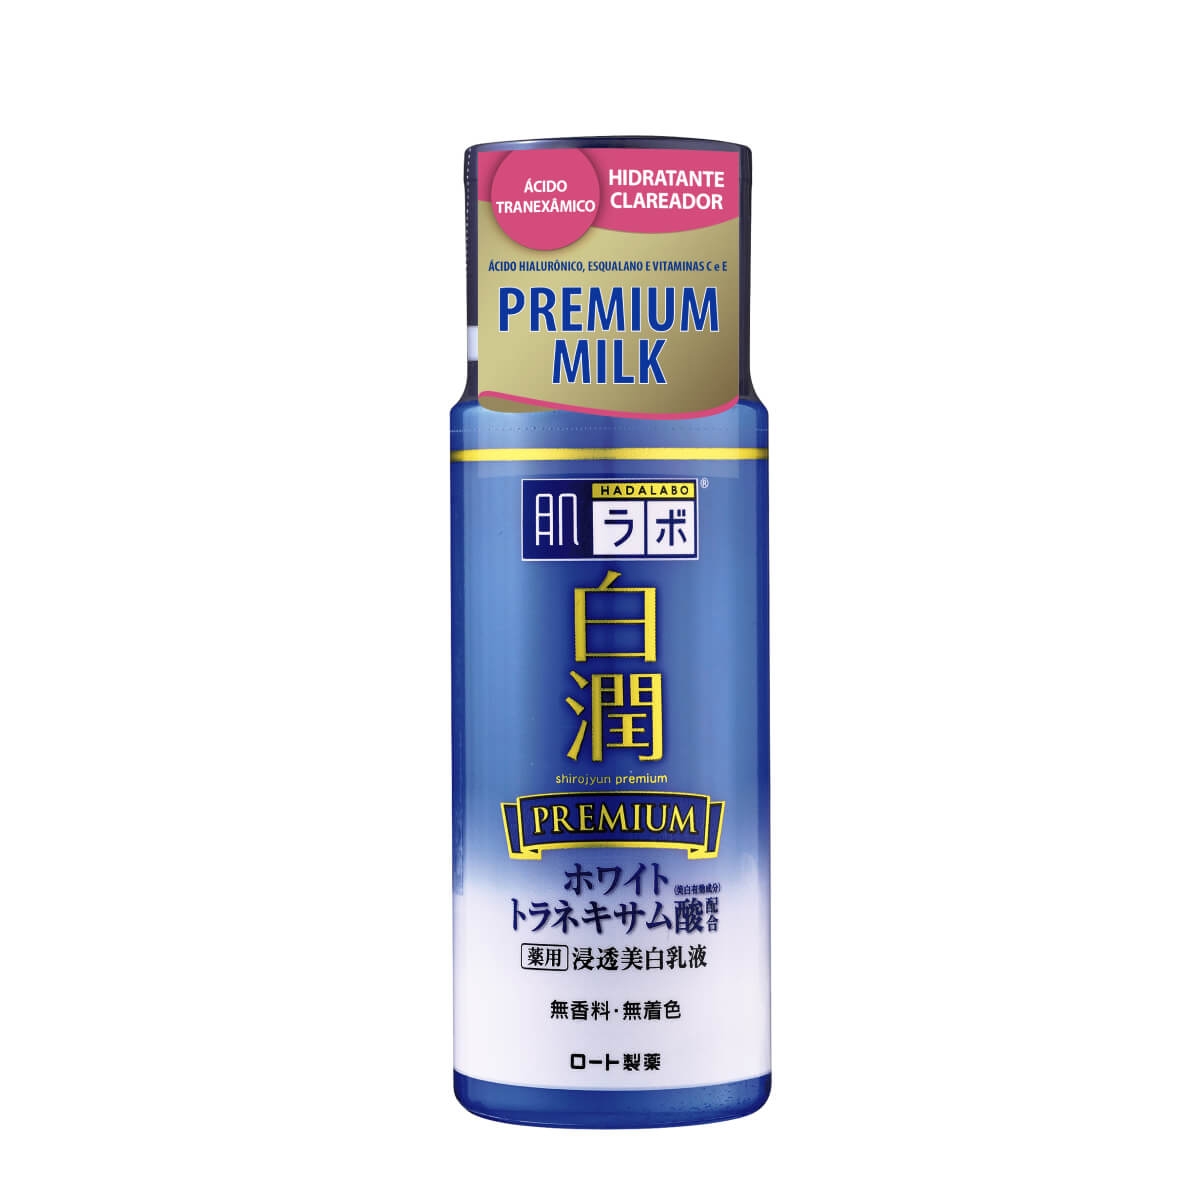 Hidratante Facial Clareador Hada Labo Shirojyun Premium Milk com 140ml 140ml